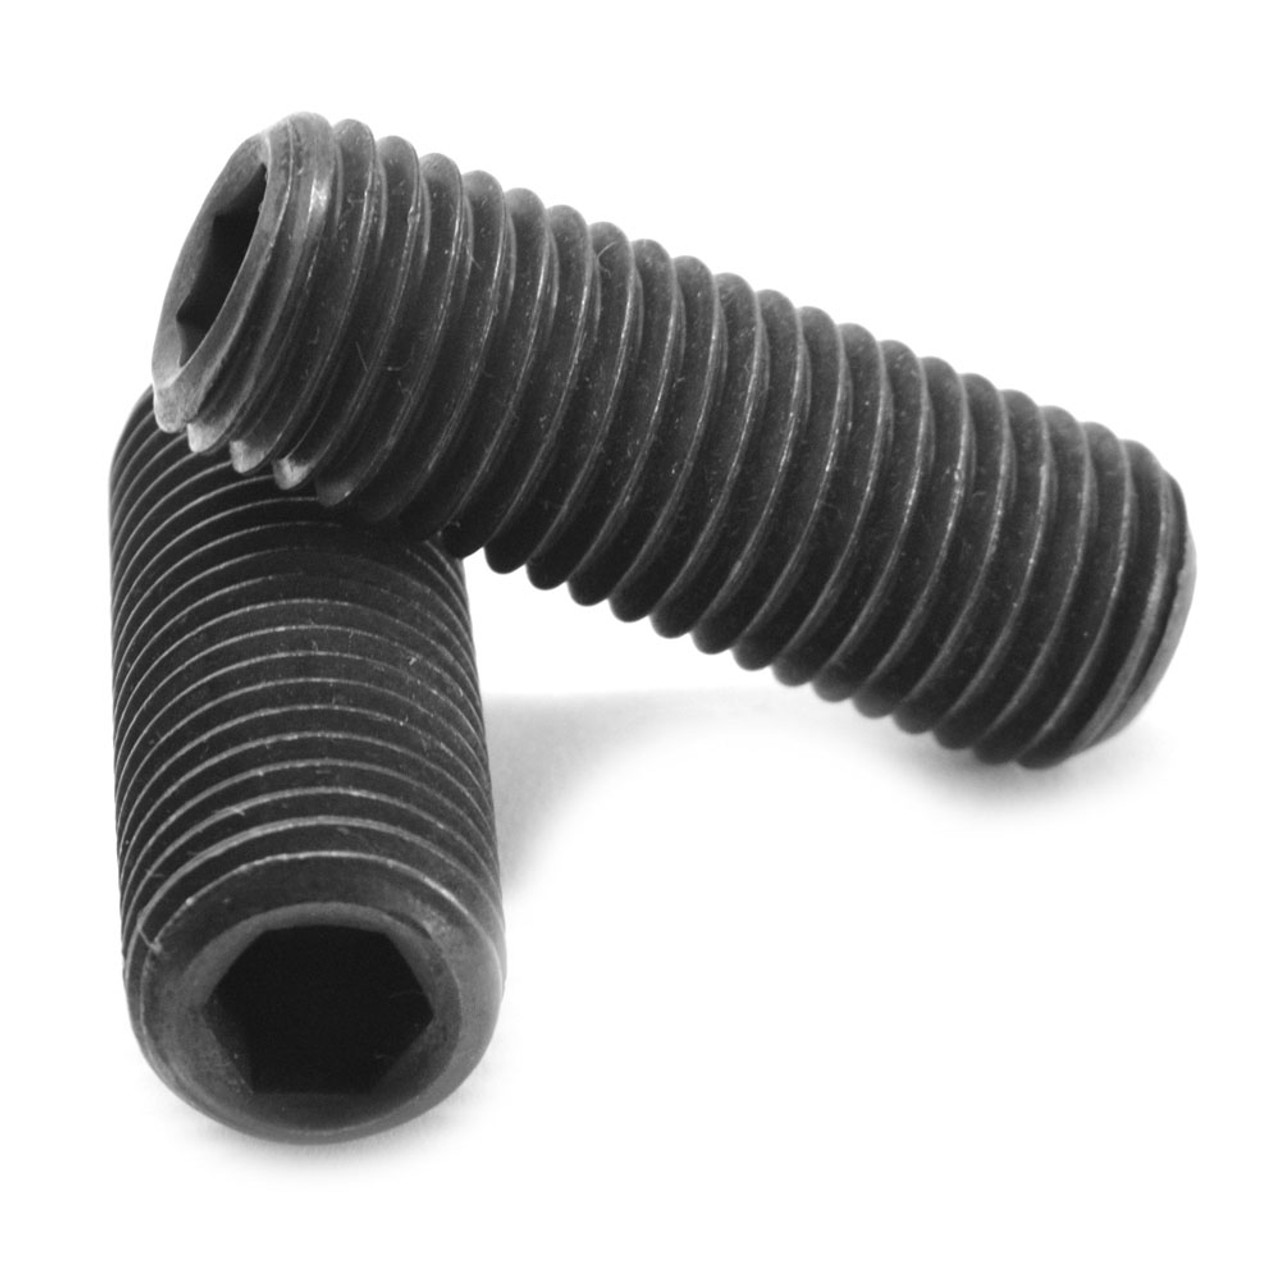 1"-14 x 1" UNS Thread Socket Set Screw Cup Point Alloy Steel Black Oxide